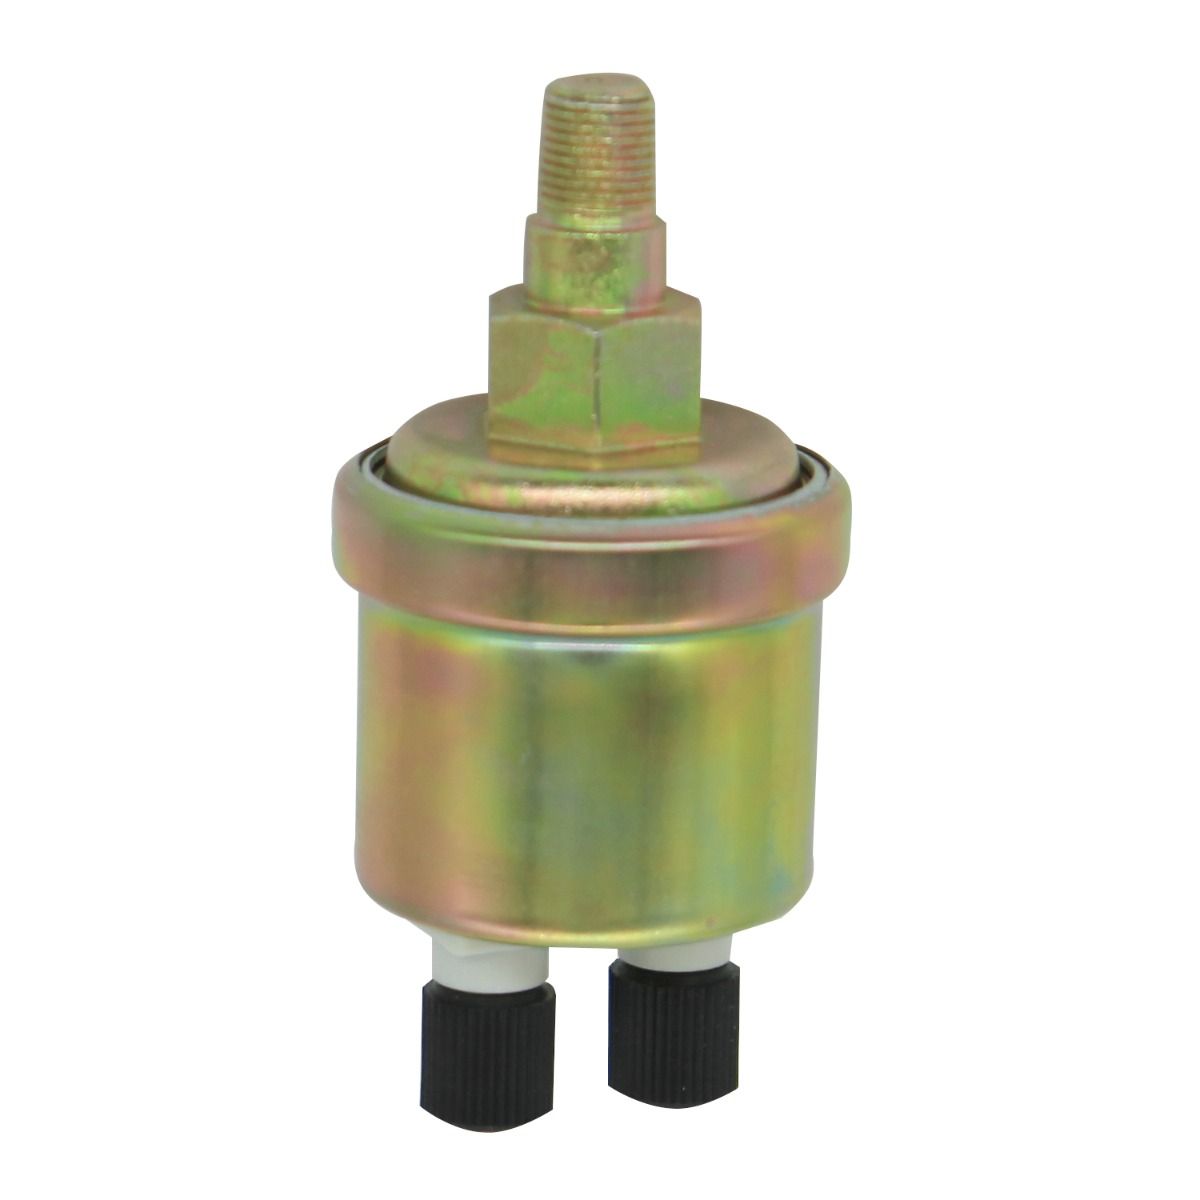 Disenparts 3967251 Oil Pressure Sensor for Cummins 3.9 ISB QSB 4BT 6BT Engine B 5.9 